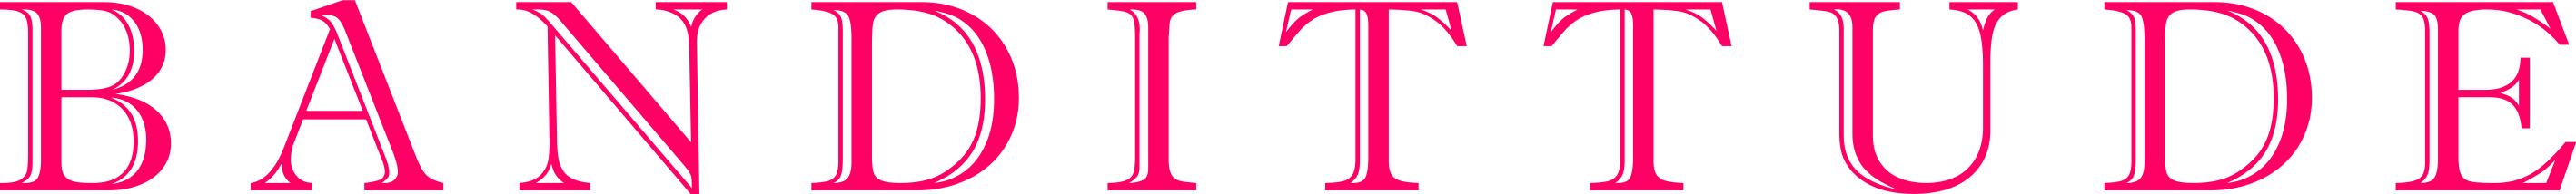 bandittude logo